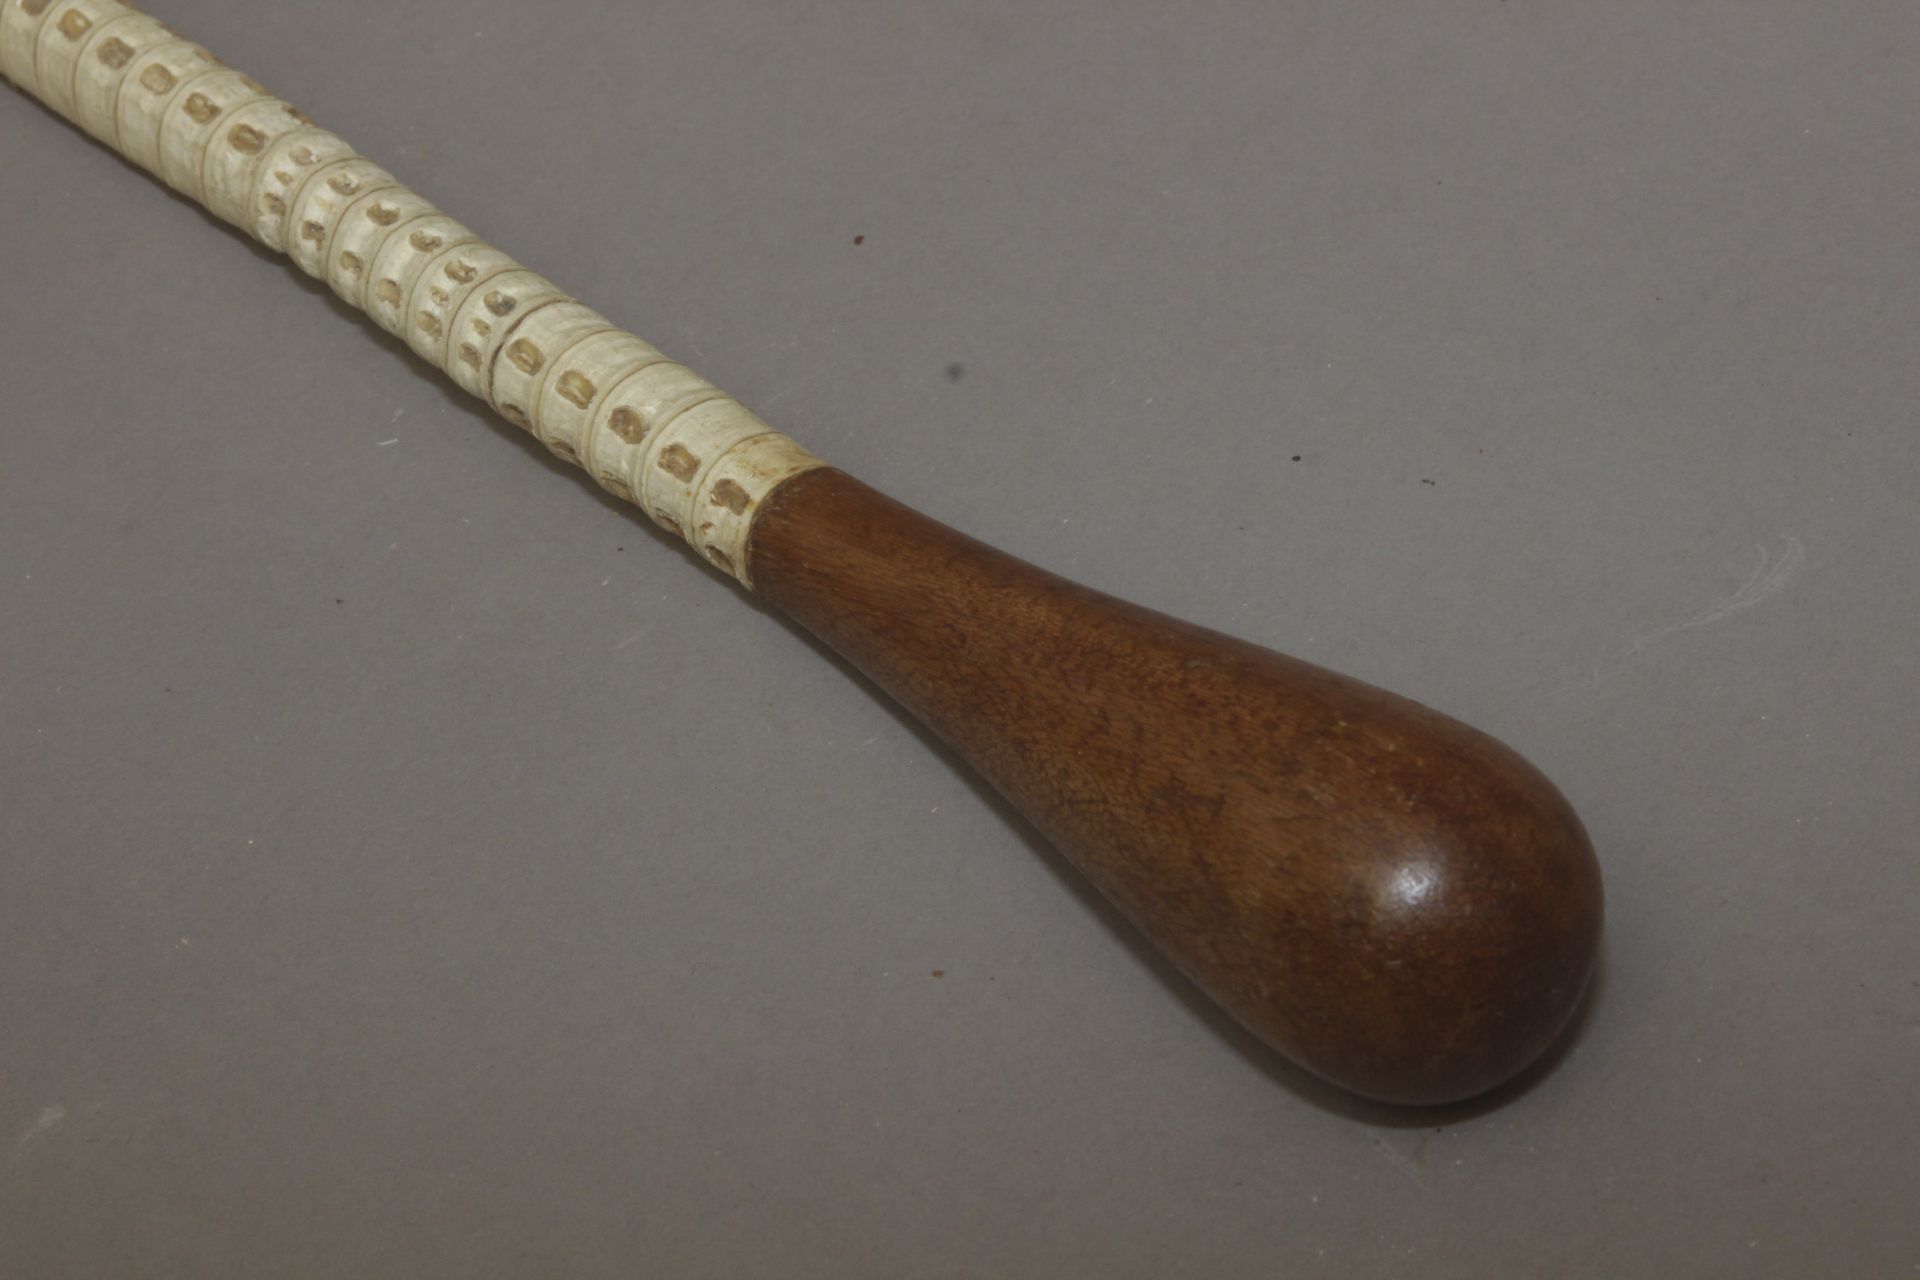 An early 20th century marine knob handled cane